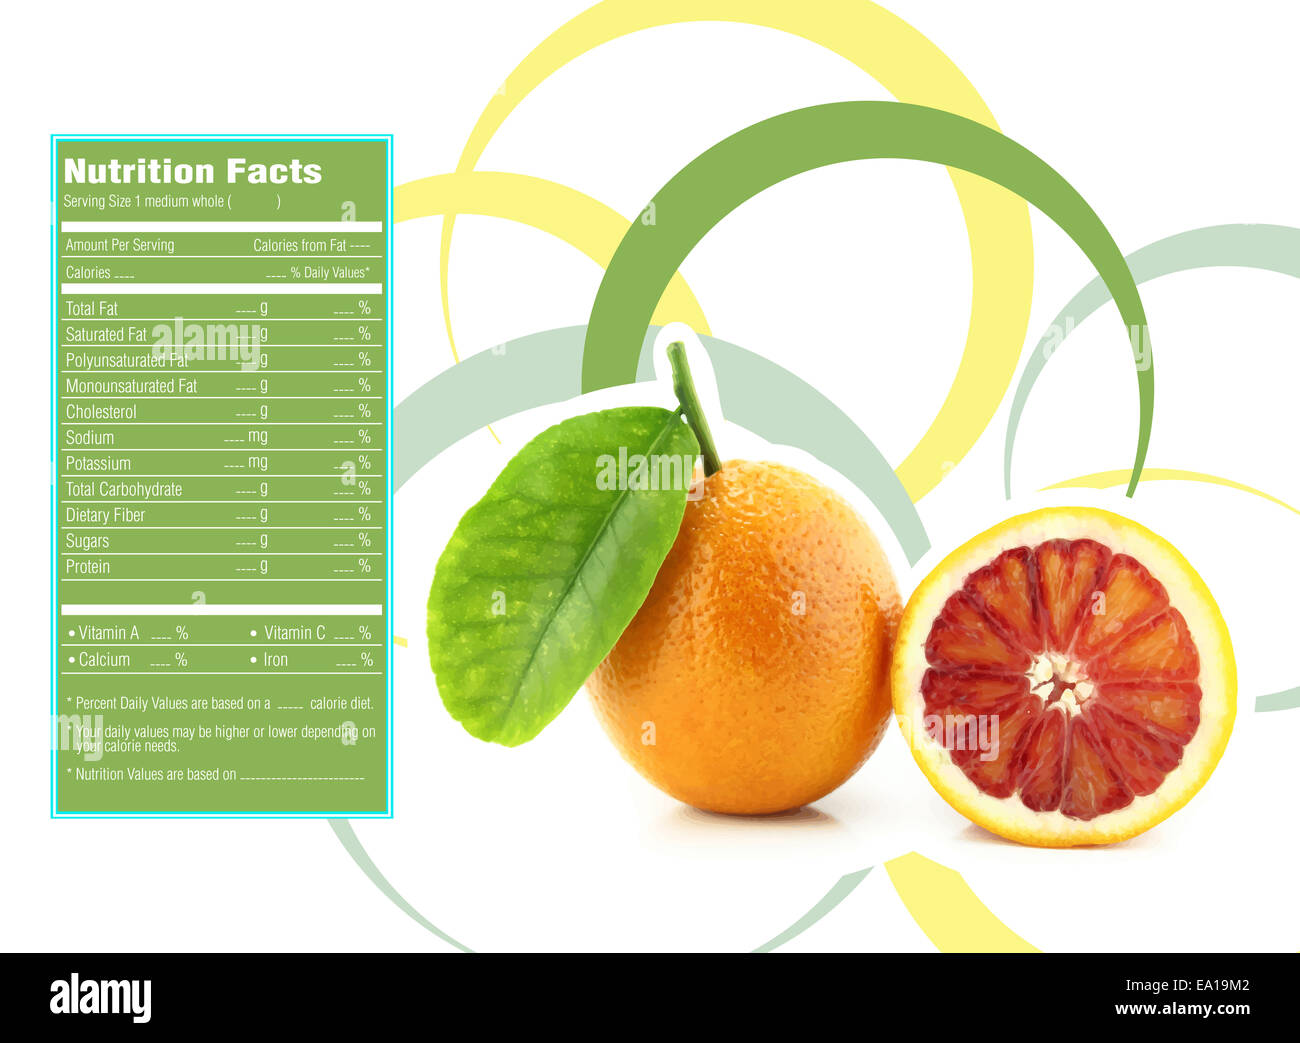 orange: calories and nutritional composition